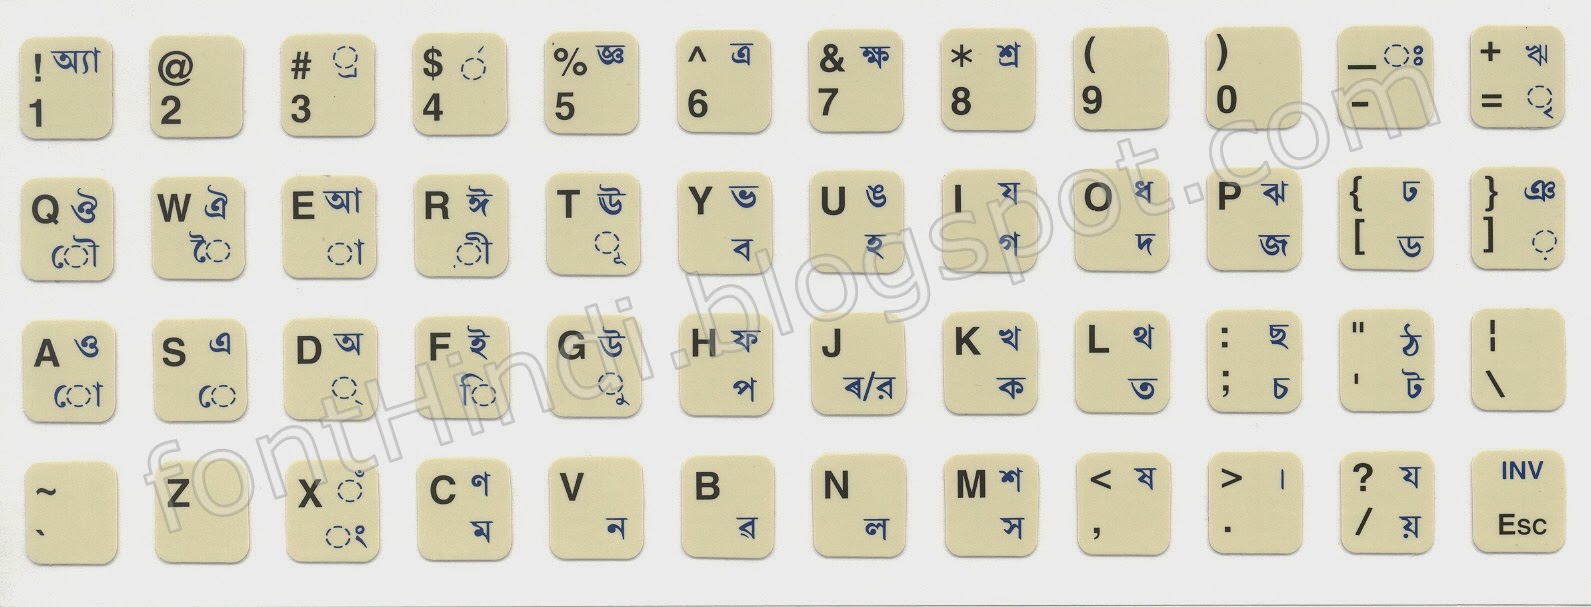 bijoy bayanno keyboard layout pdf